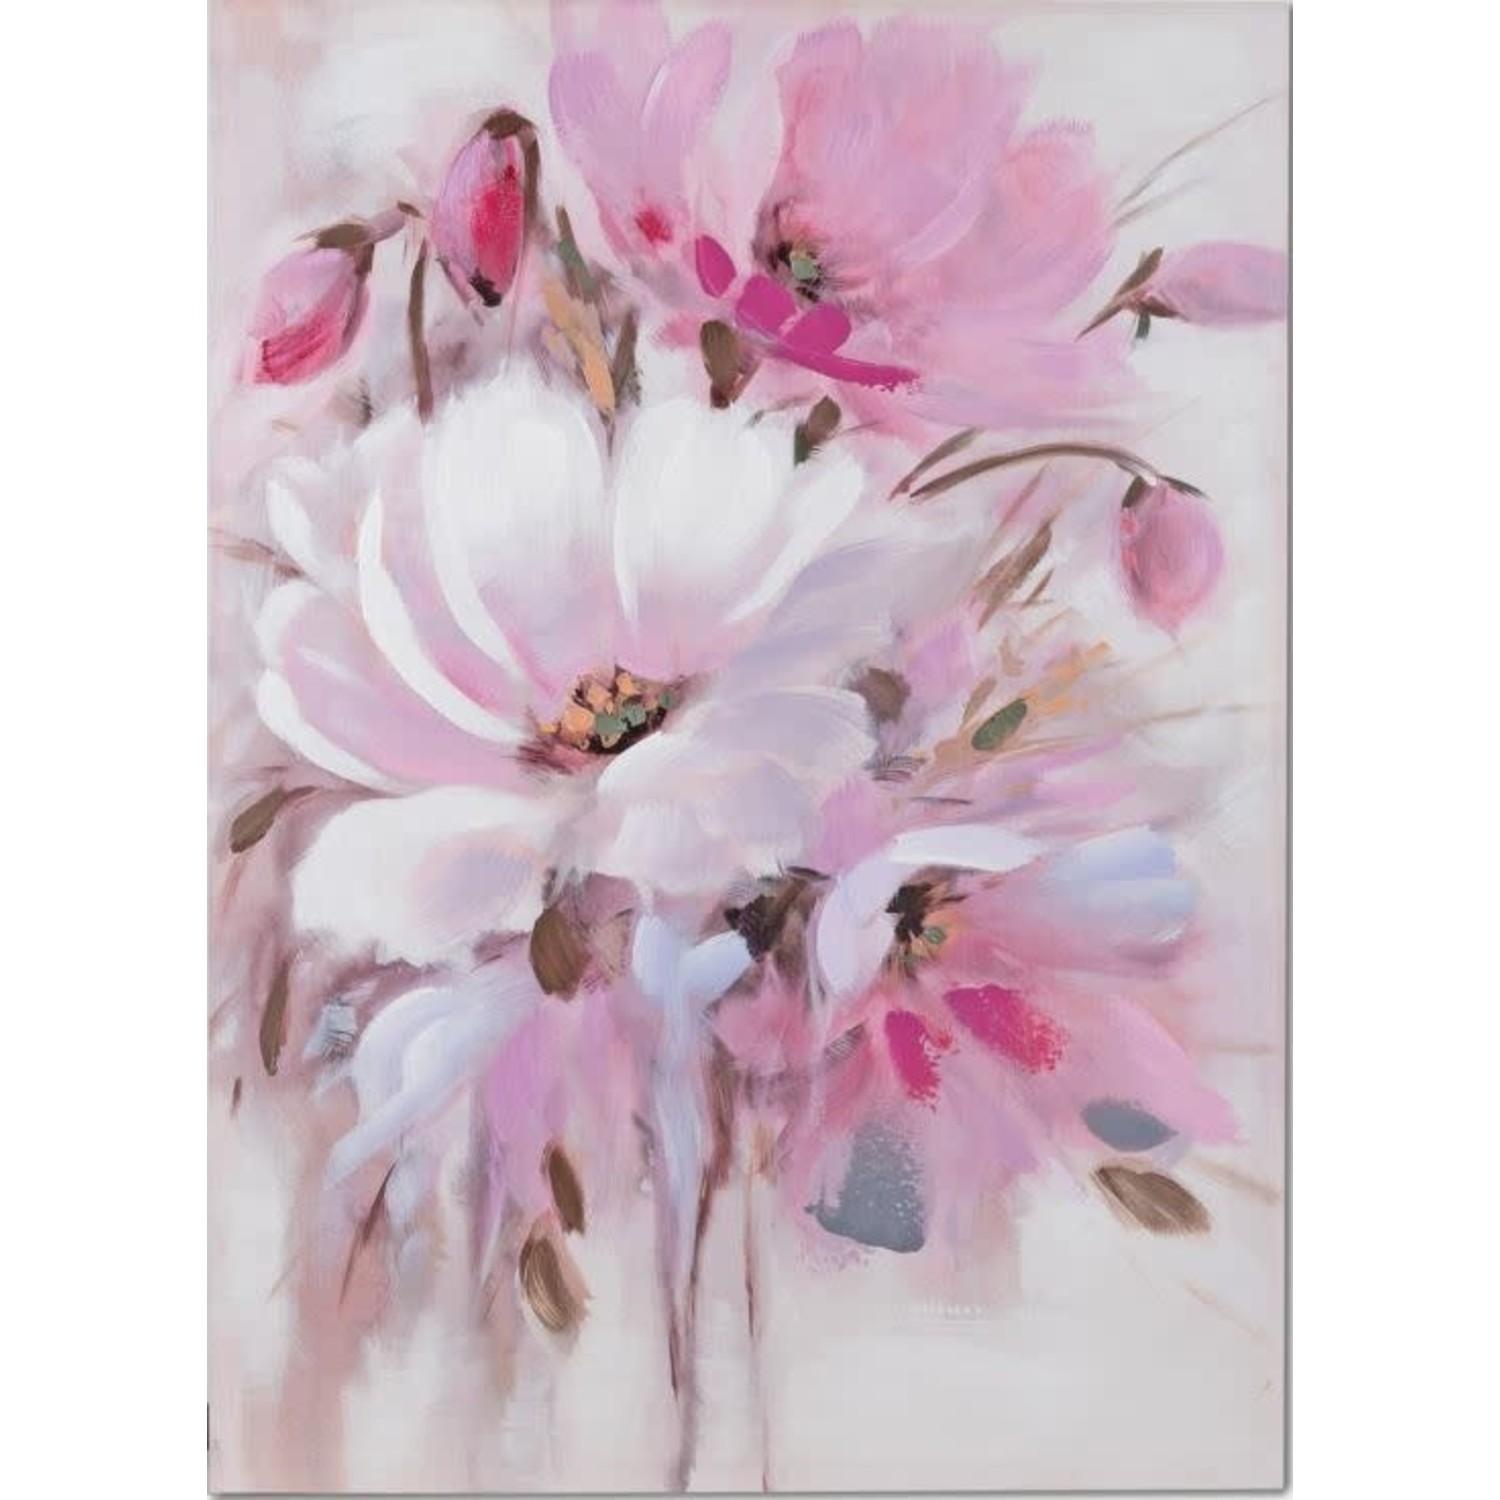 Gemälde Leinwand Rosa Blumen 2 50x70cm - Eliassen Home & Garden Pleasure